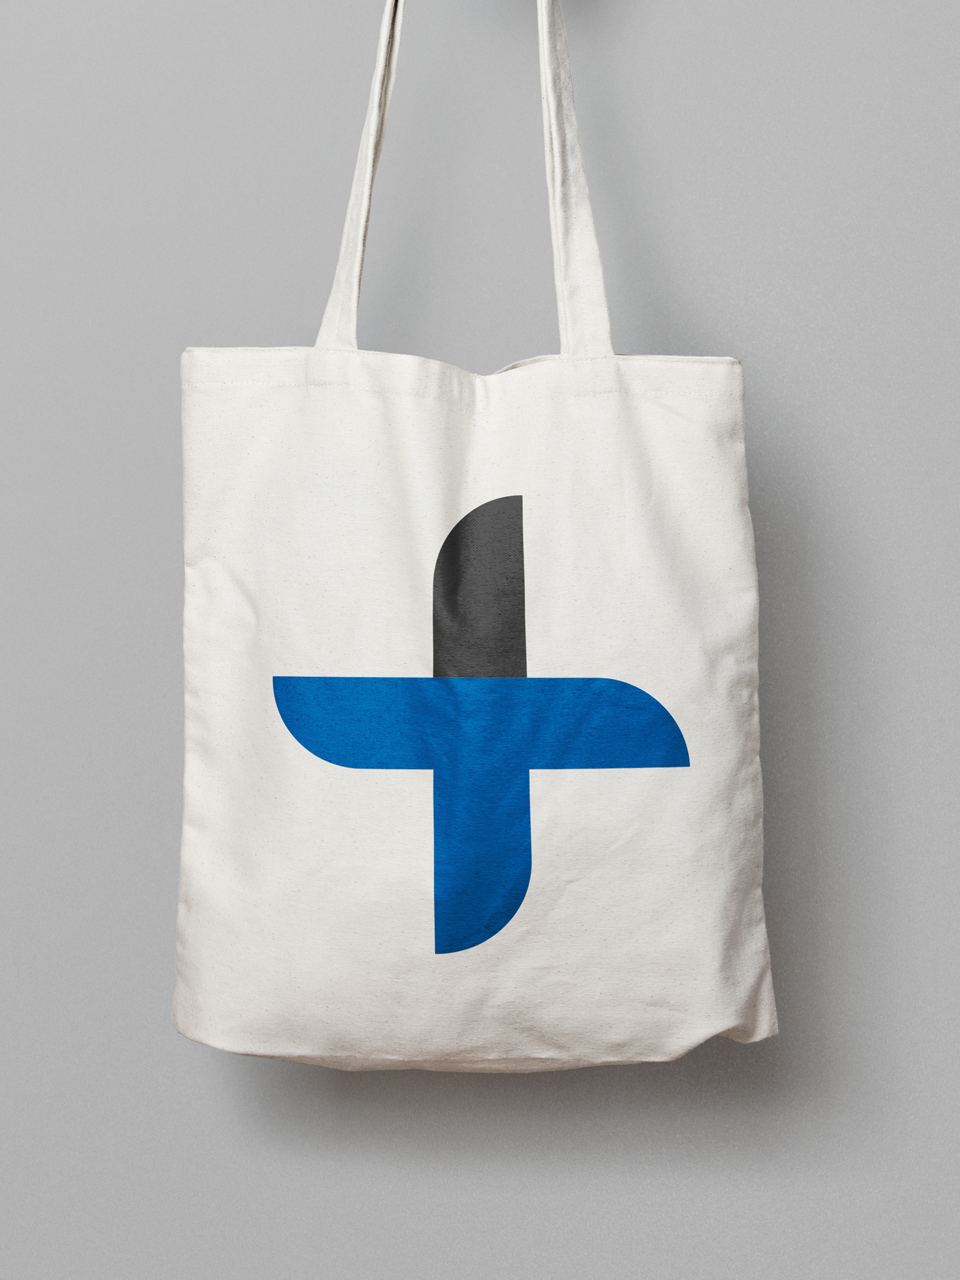 azienda medica bag design